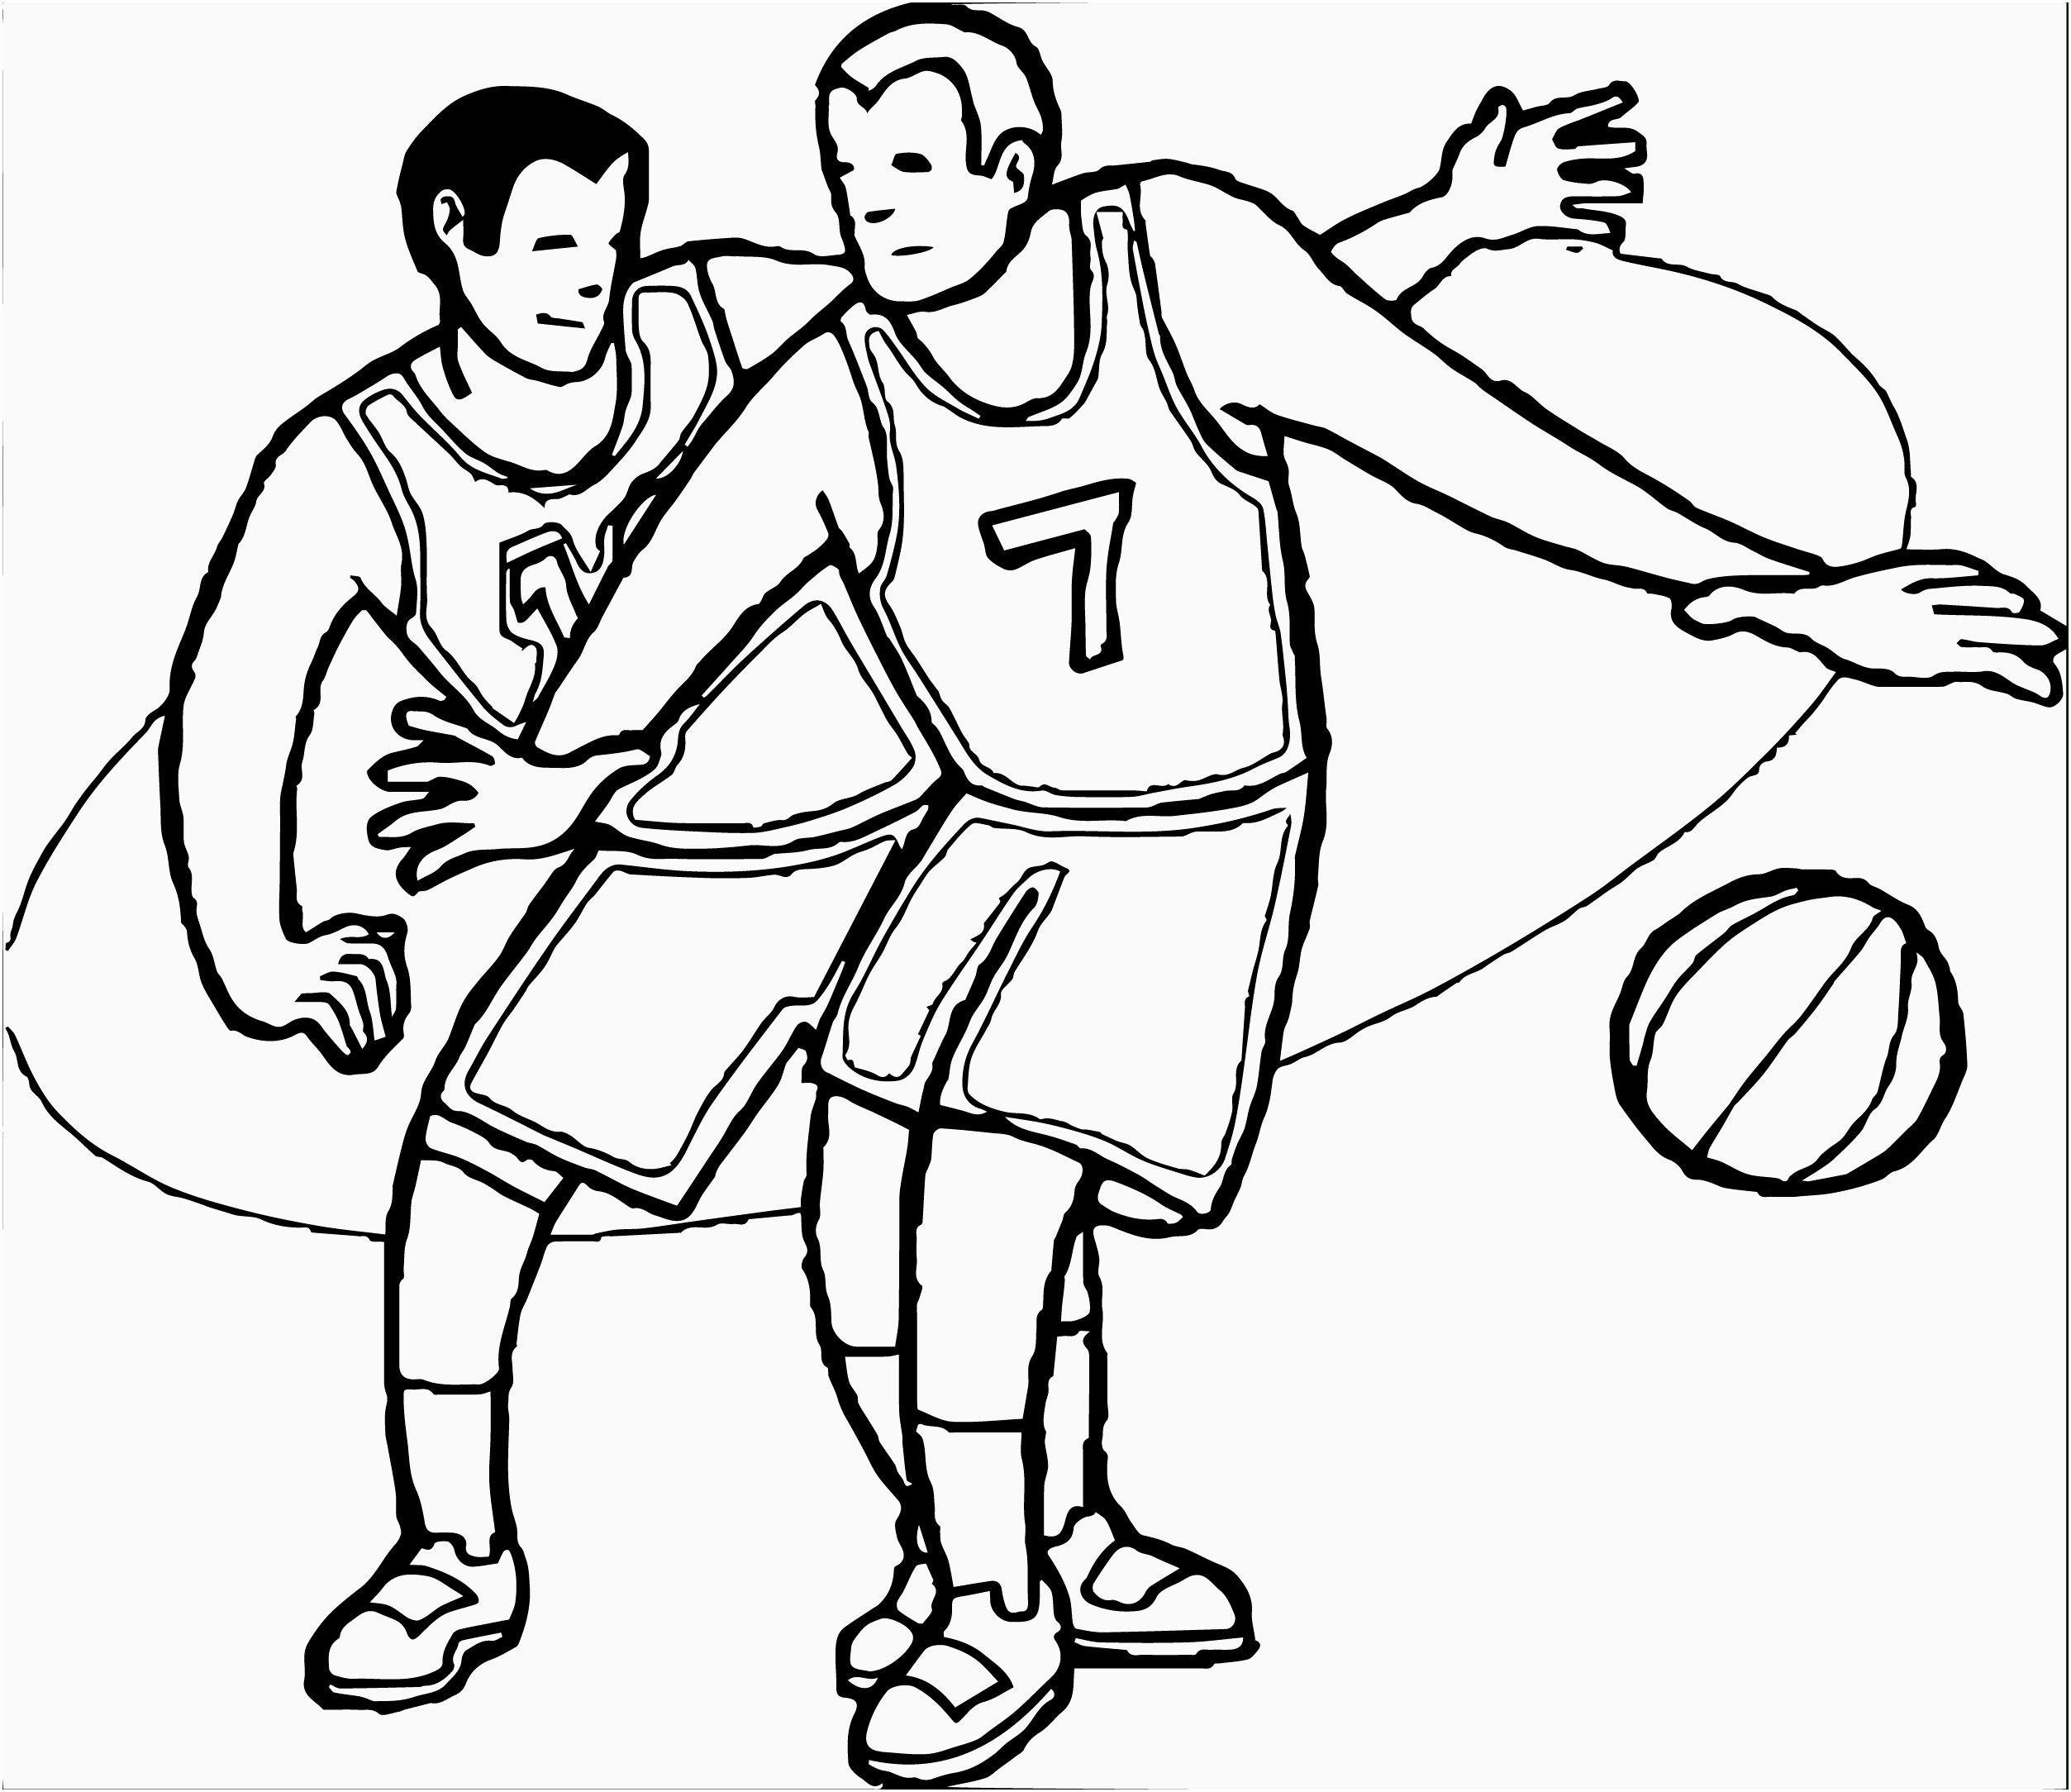 Basketball Player Drawing